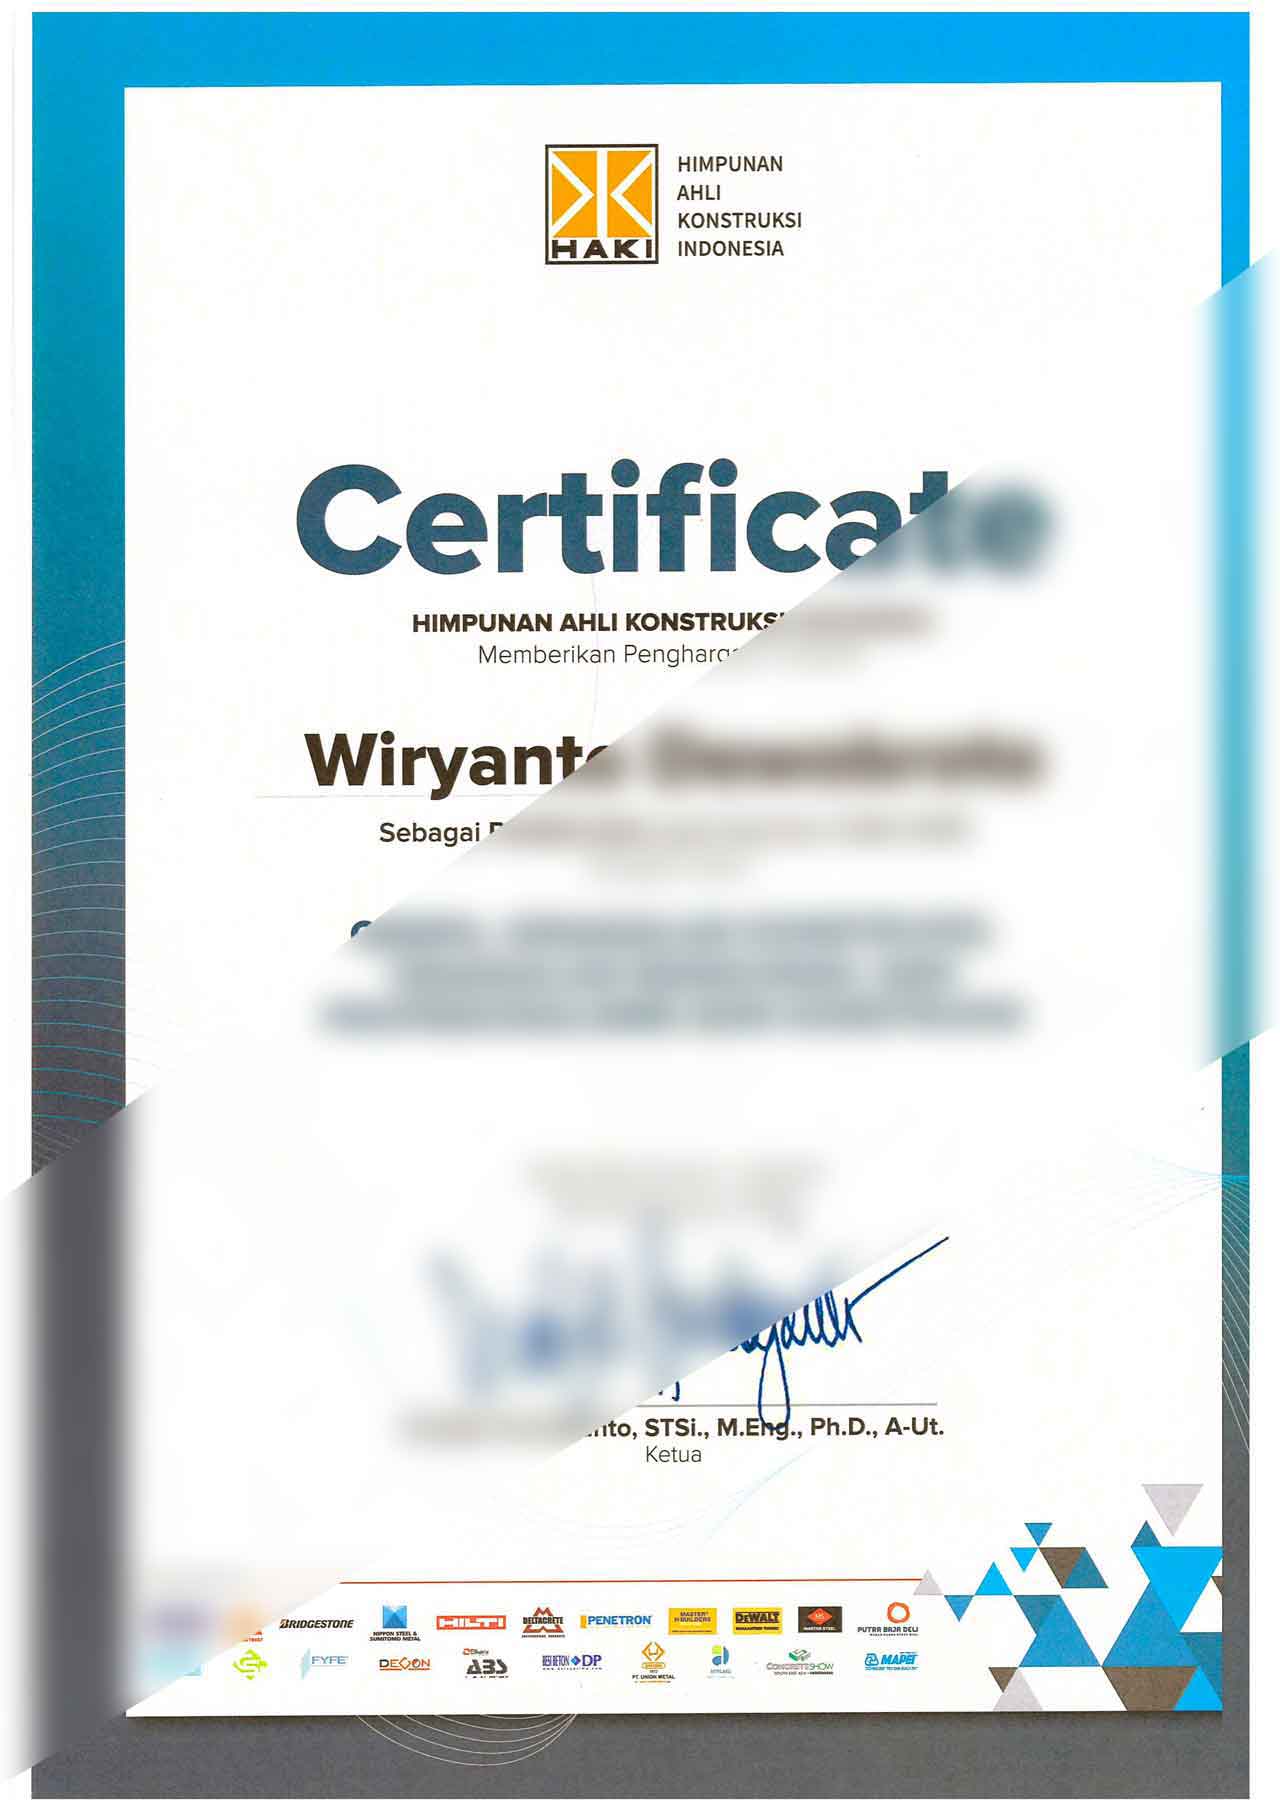 _Certificate-HAKI-2018-Pembicara-Wiryanto